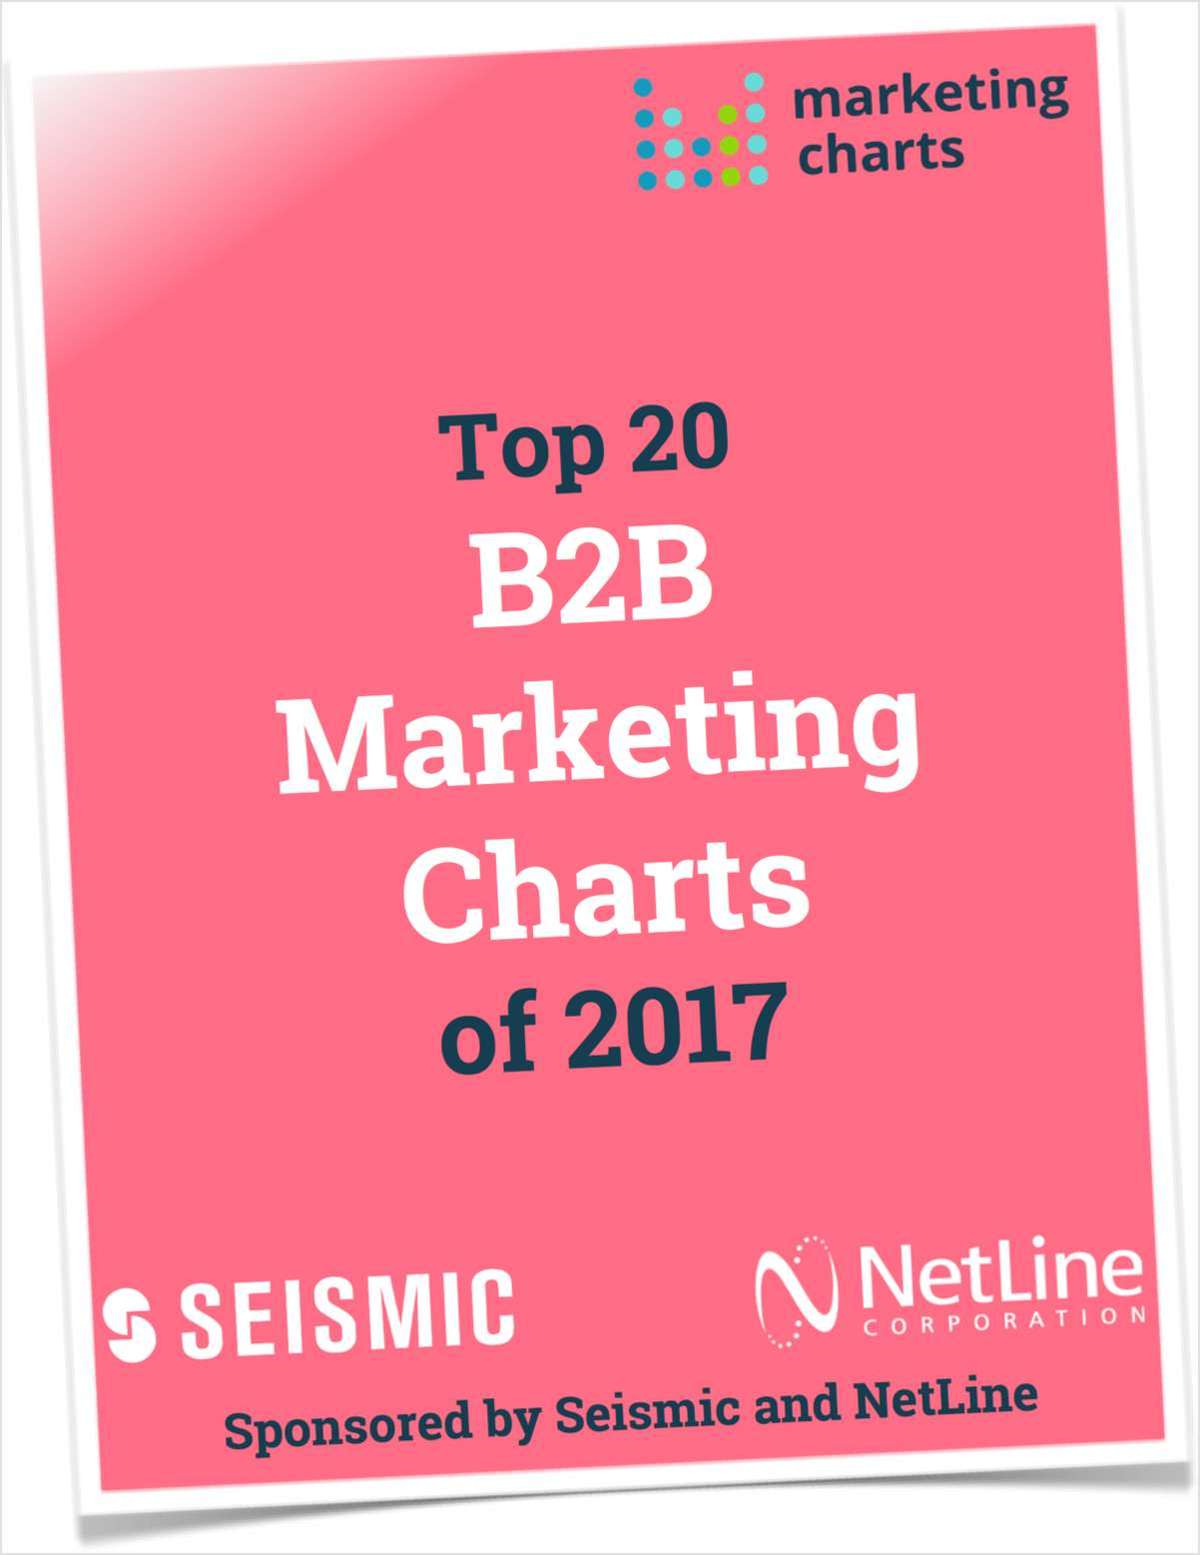 Top 20 B2B Marketing Charts of 2017